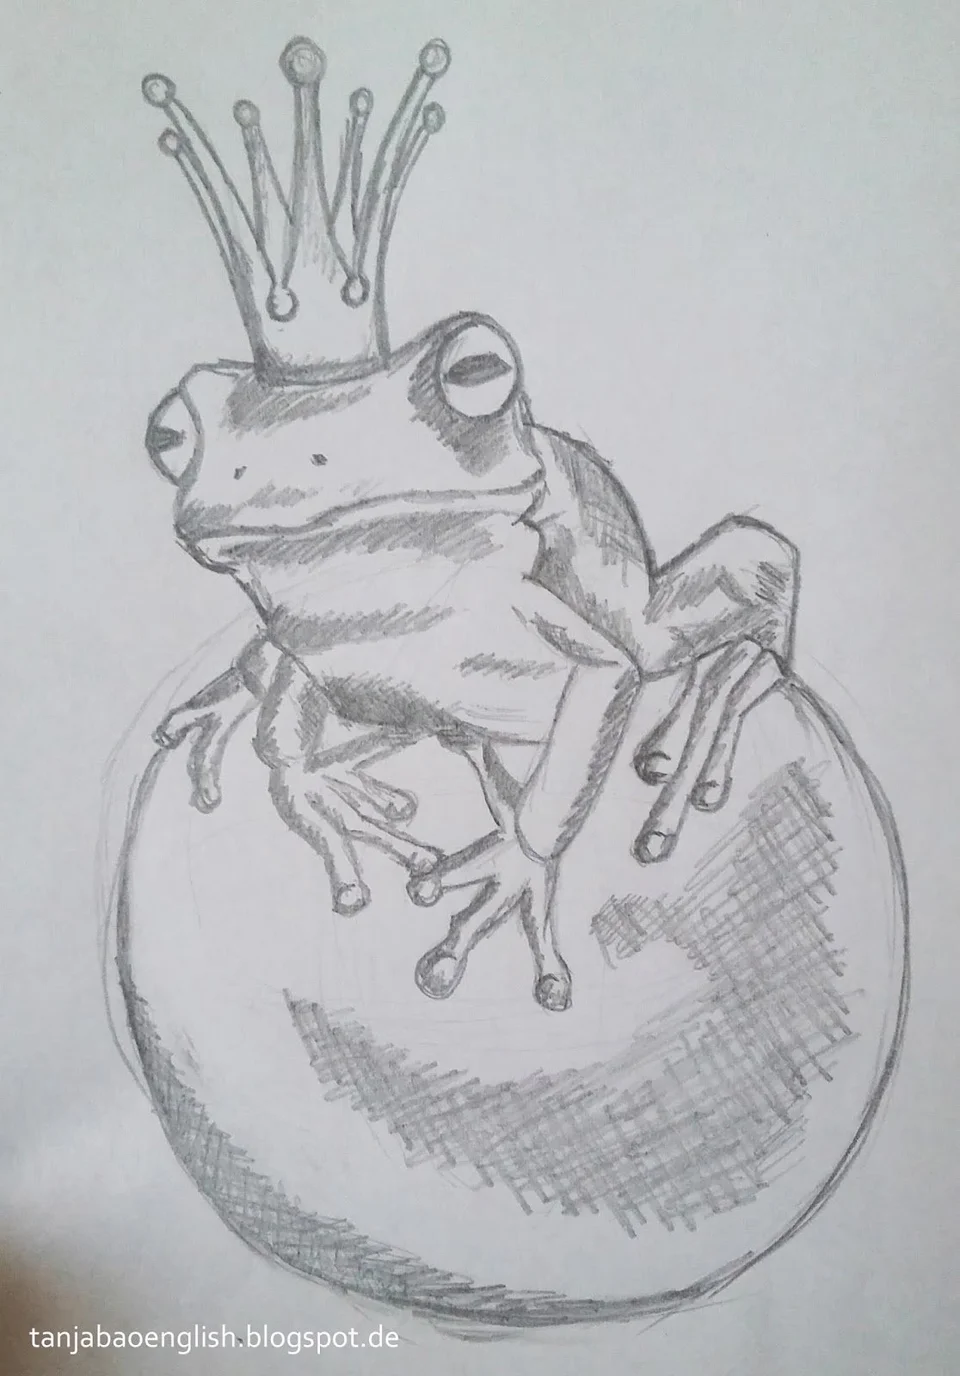 Иллюстрация к сказке царевна лягушка карандашом